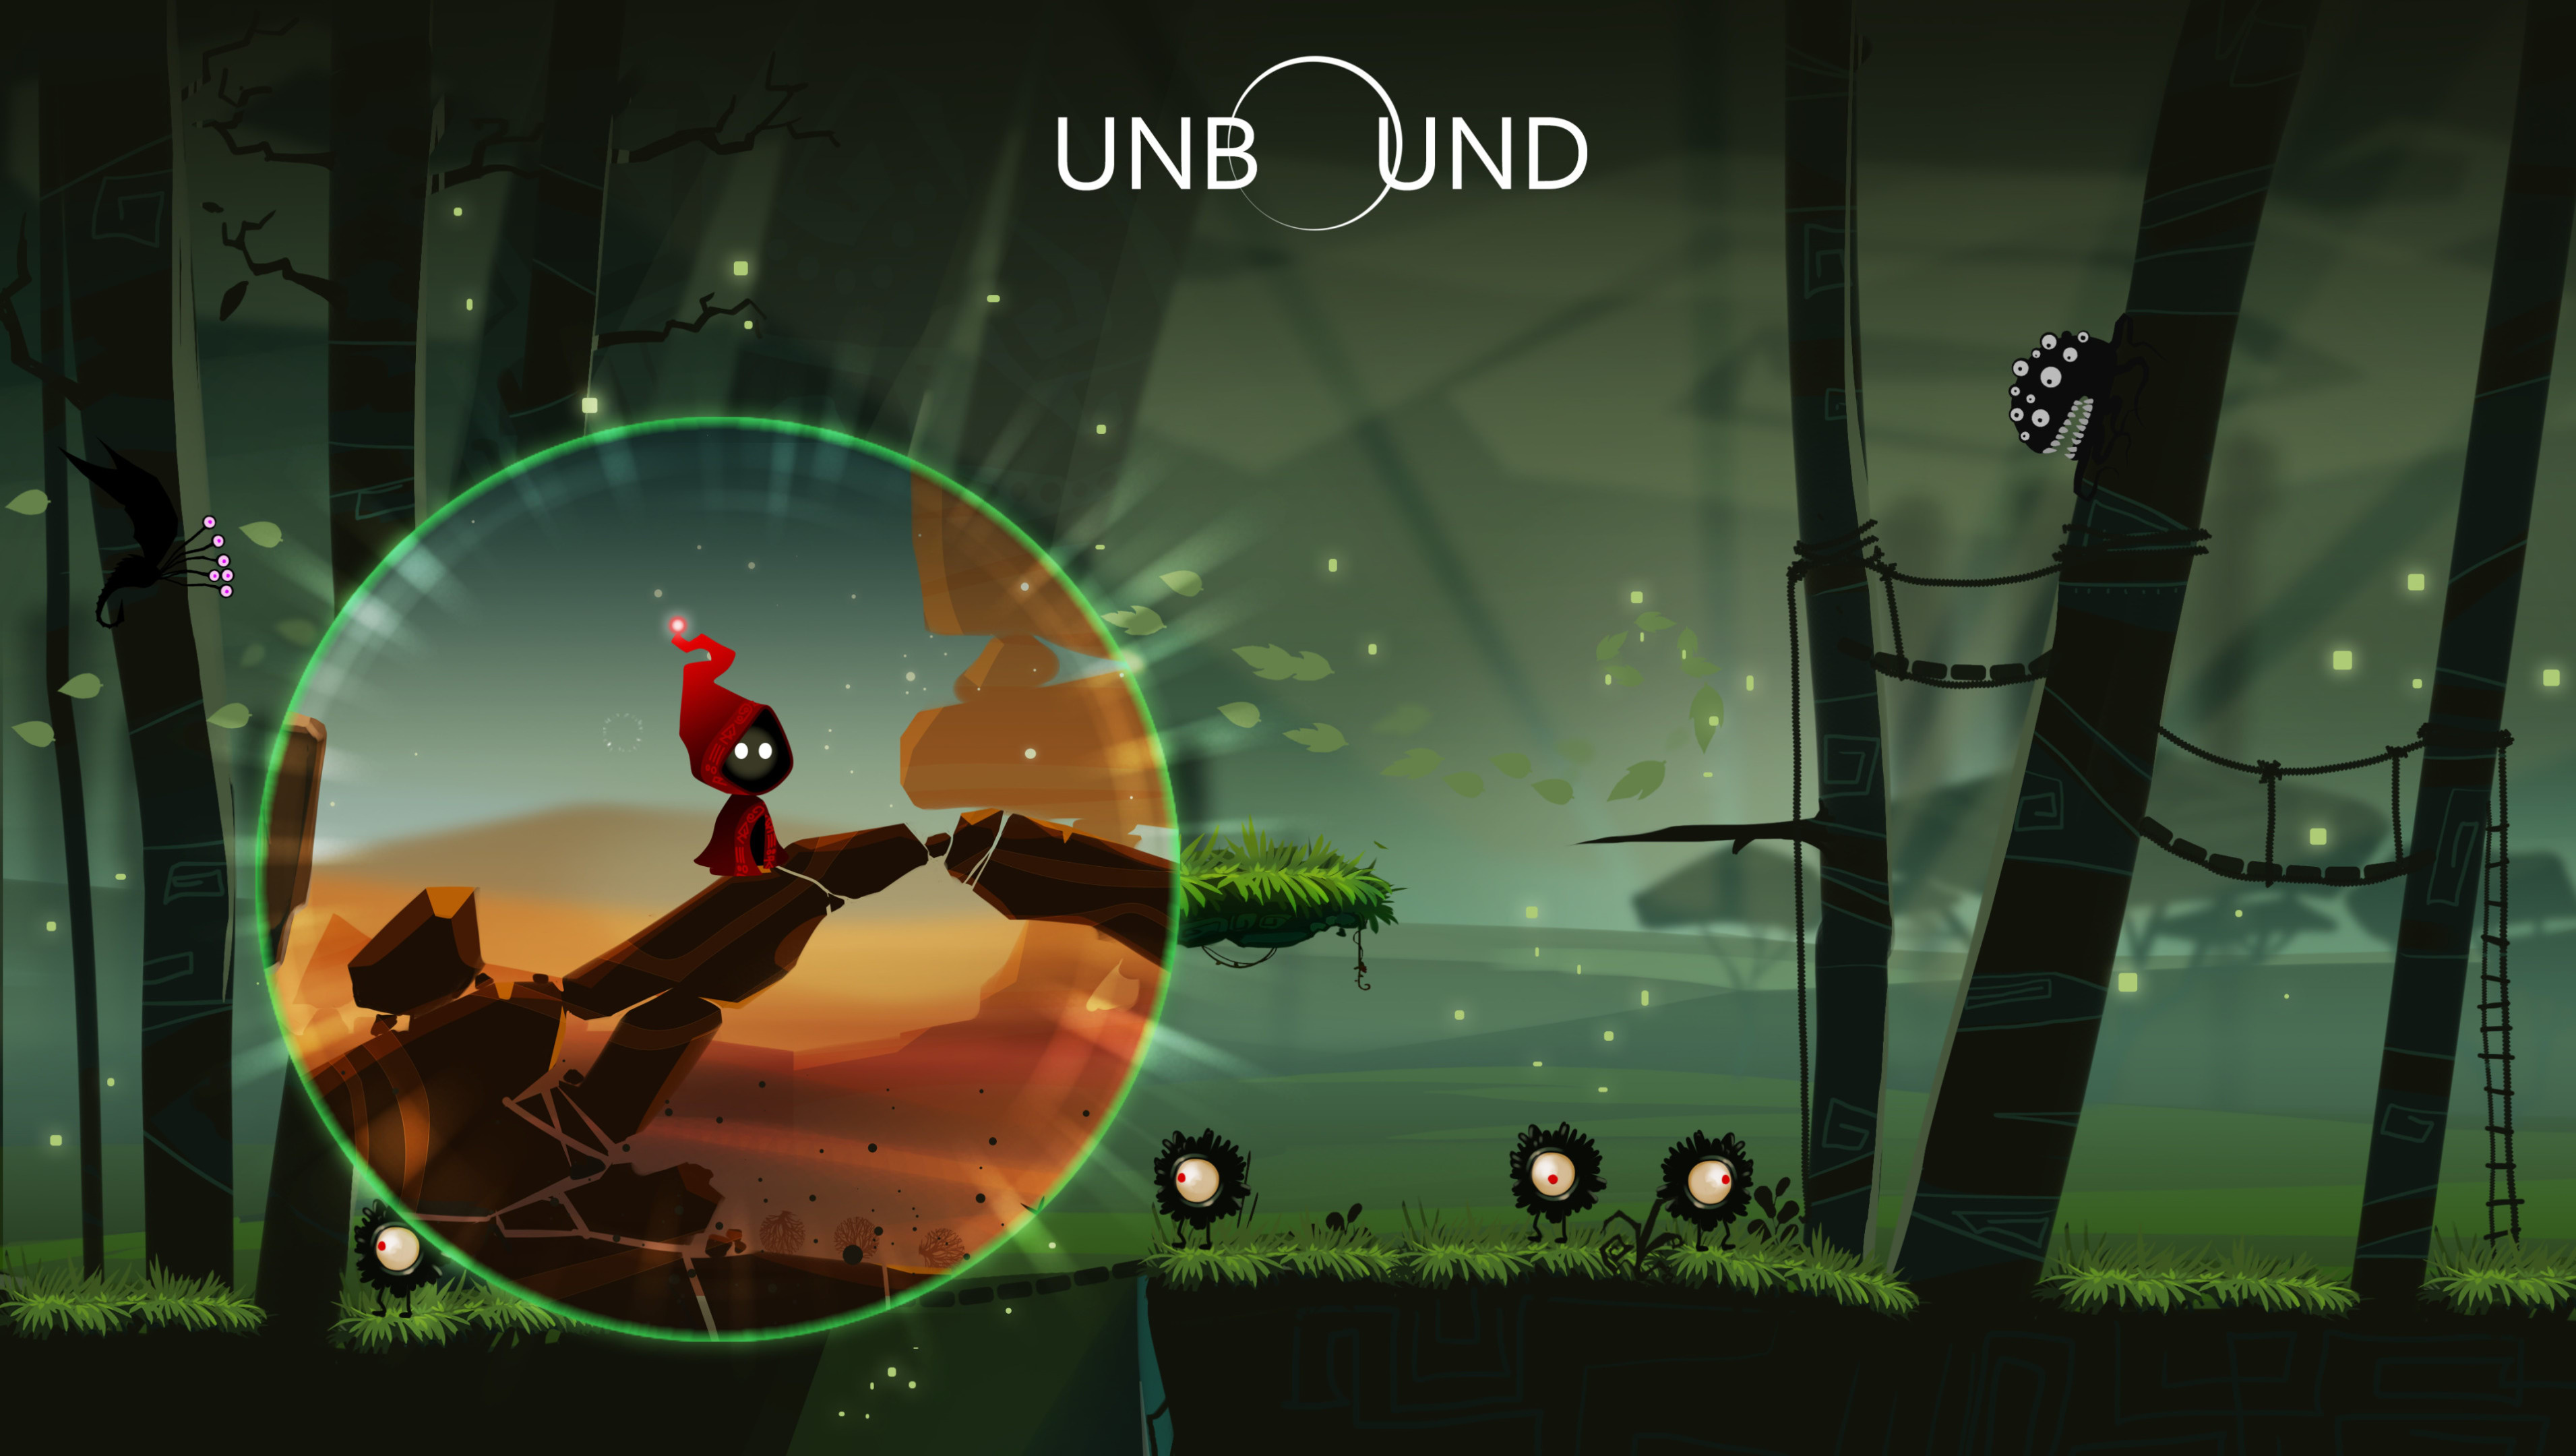 Video Game Unbound: Worlds Apart HD Wallpaper | Background Image